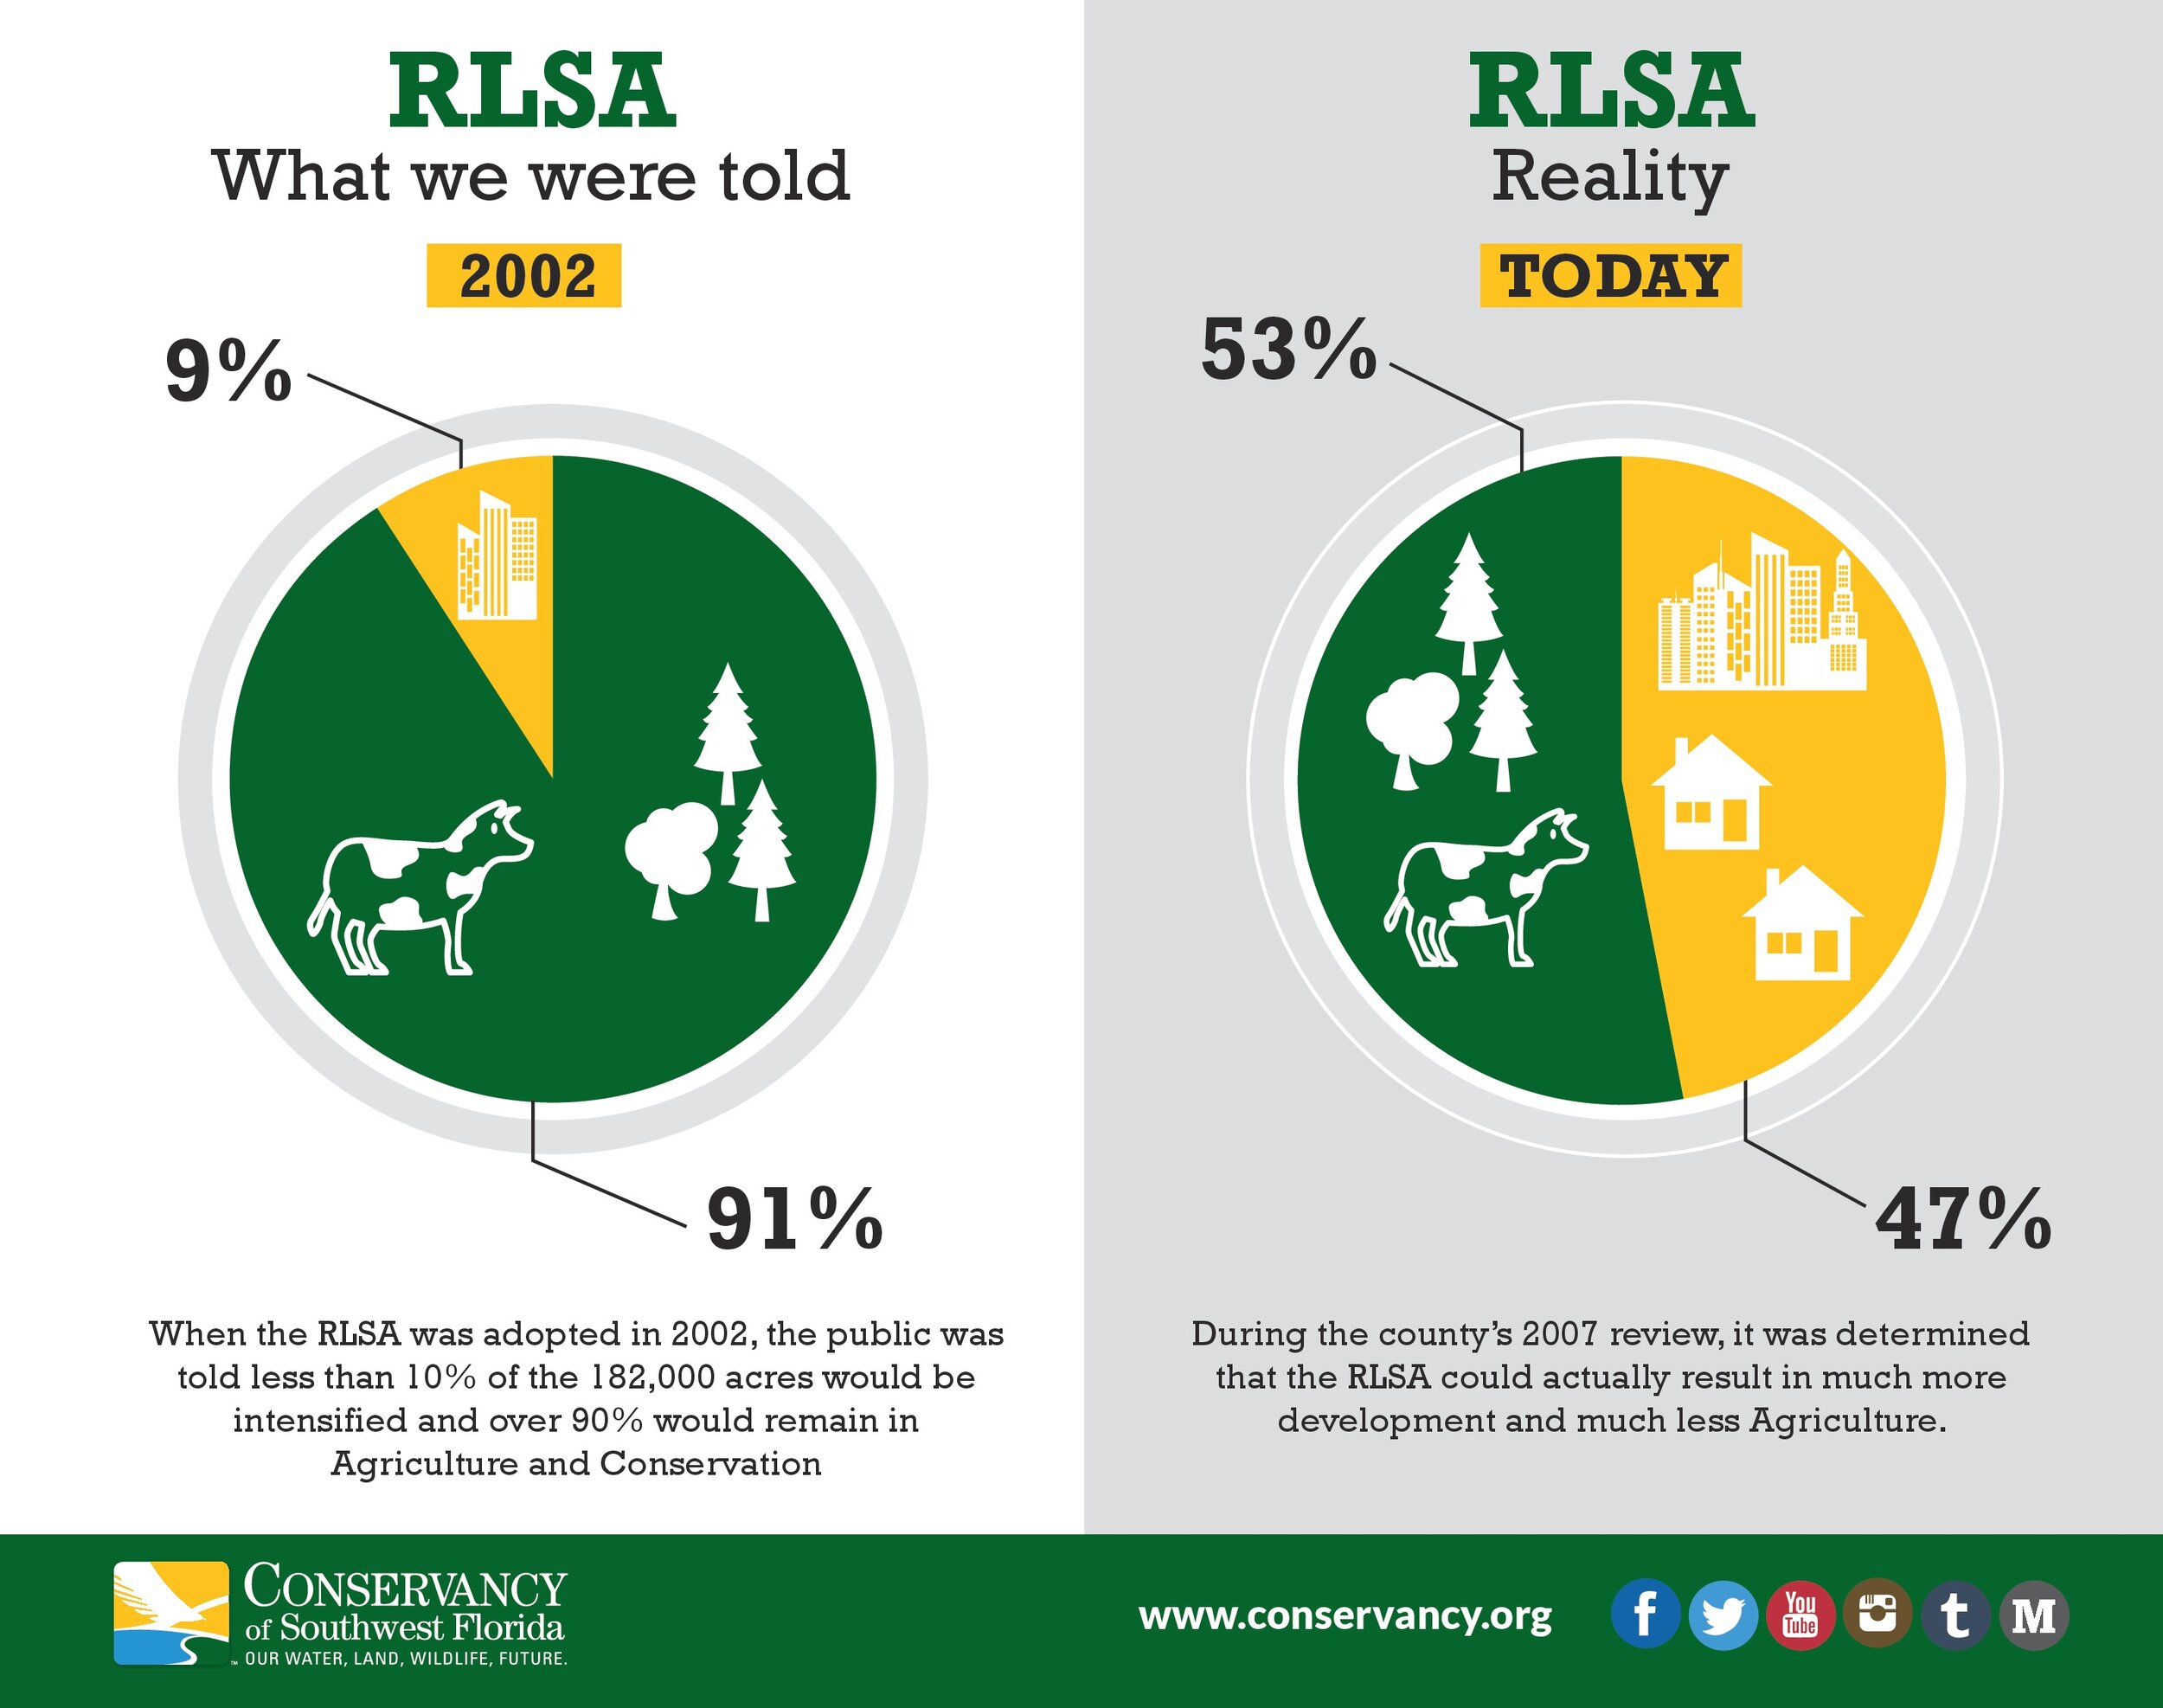 Stewardship credits dramatically increase potential development of the RLSA.